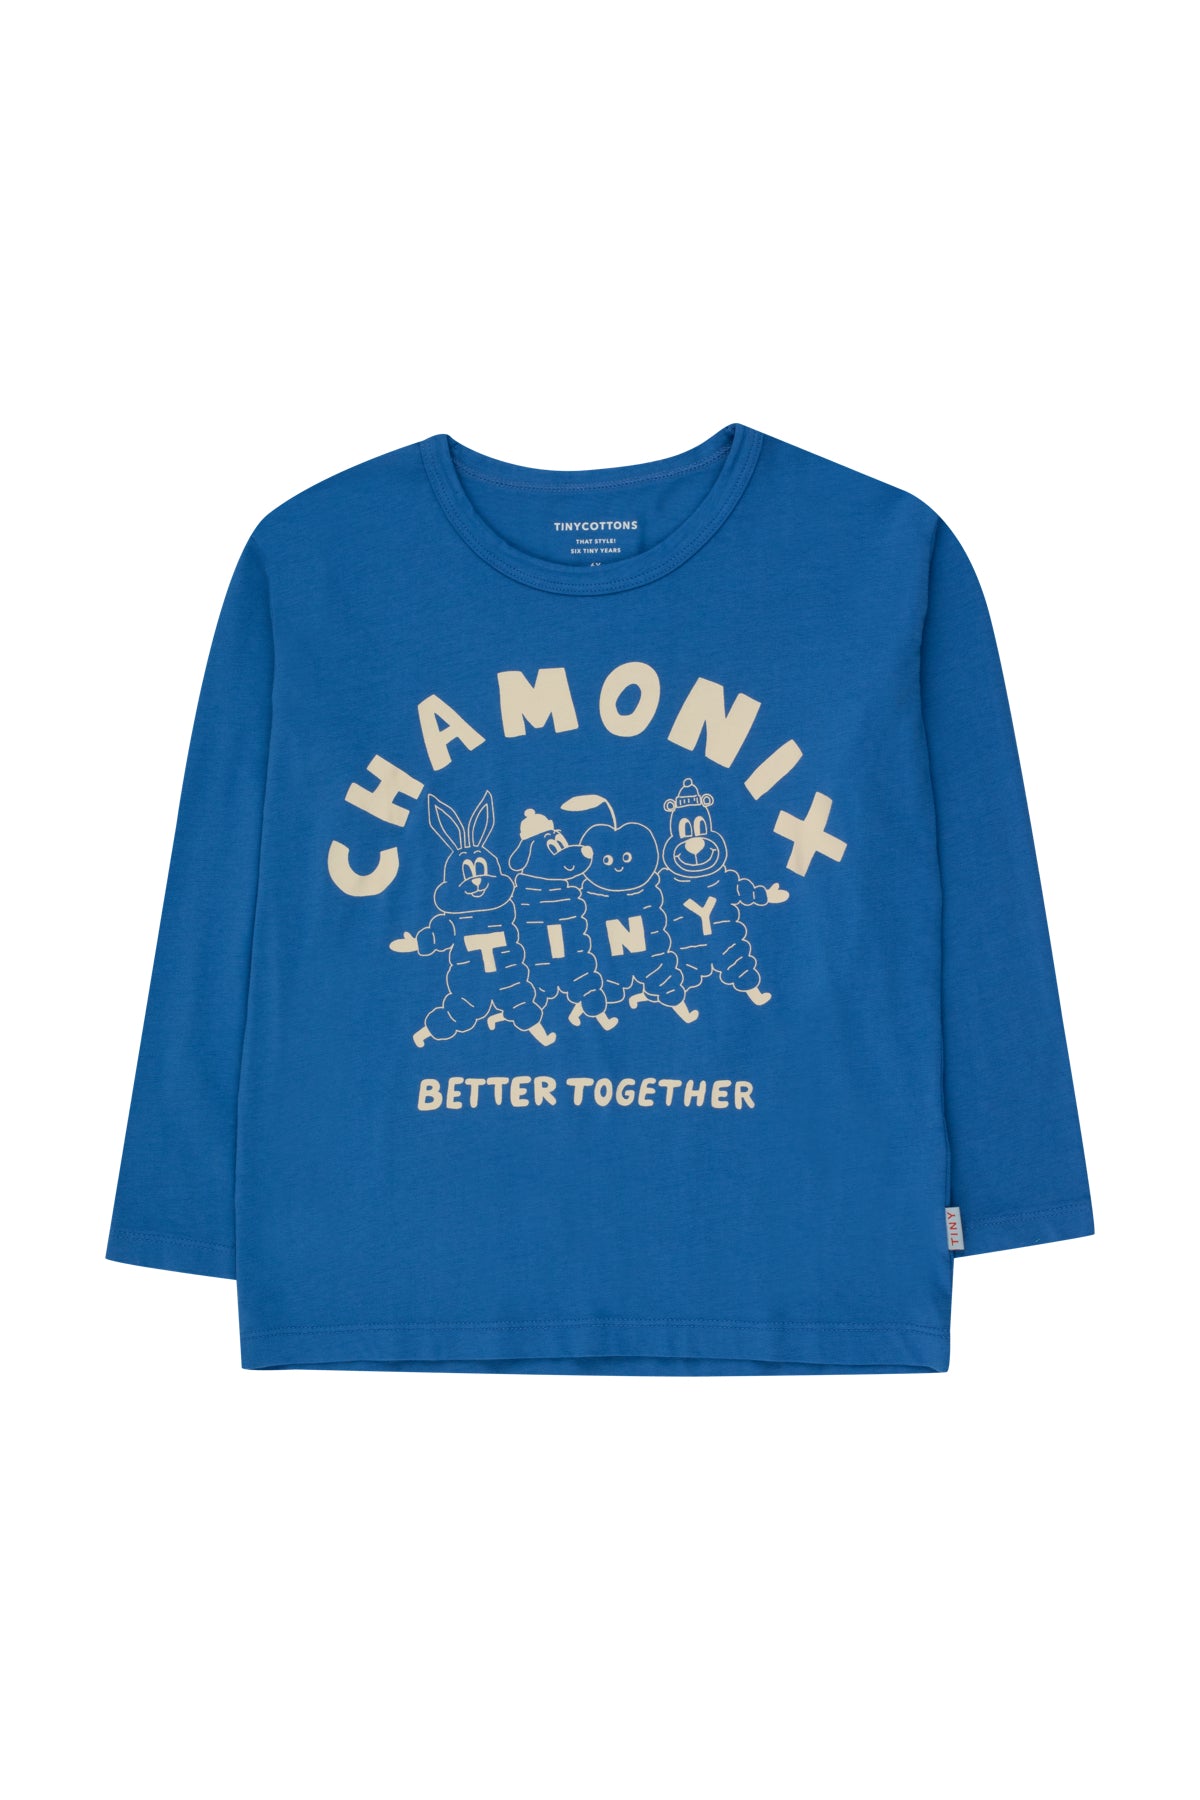 Chamonix Tee || Blue